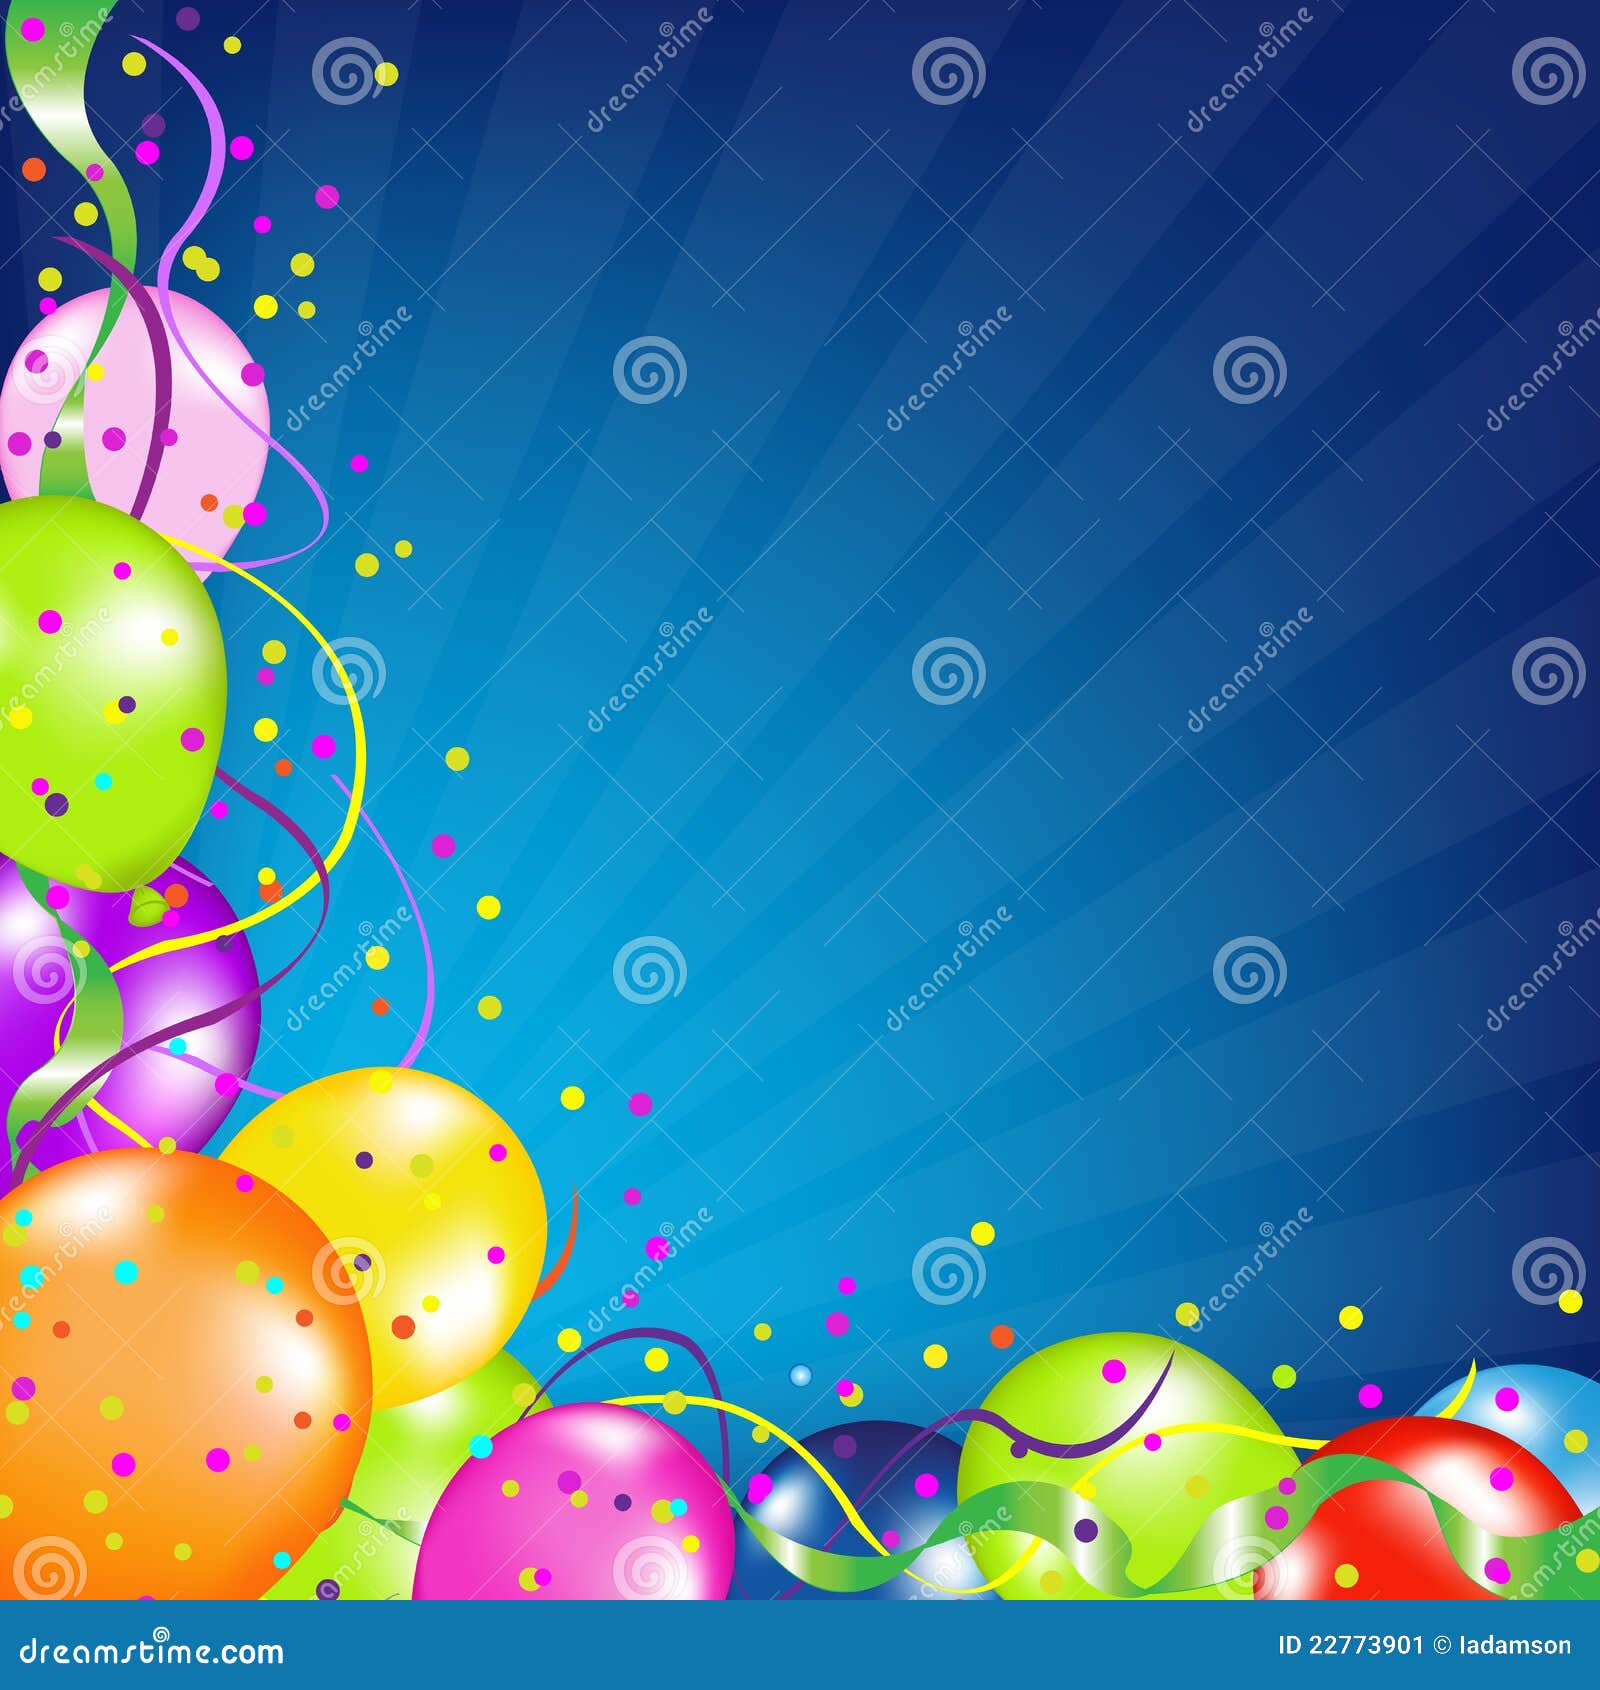 Birthday Background With Balloons And Sunburst Illustration 22773901 -  Megapixl